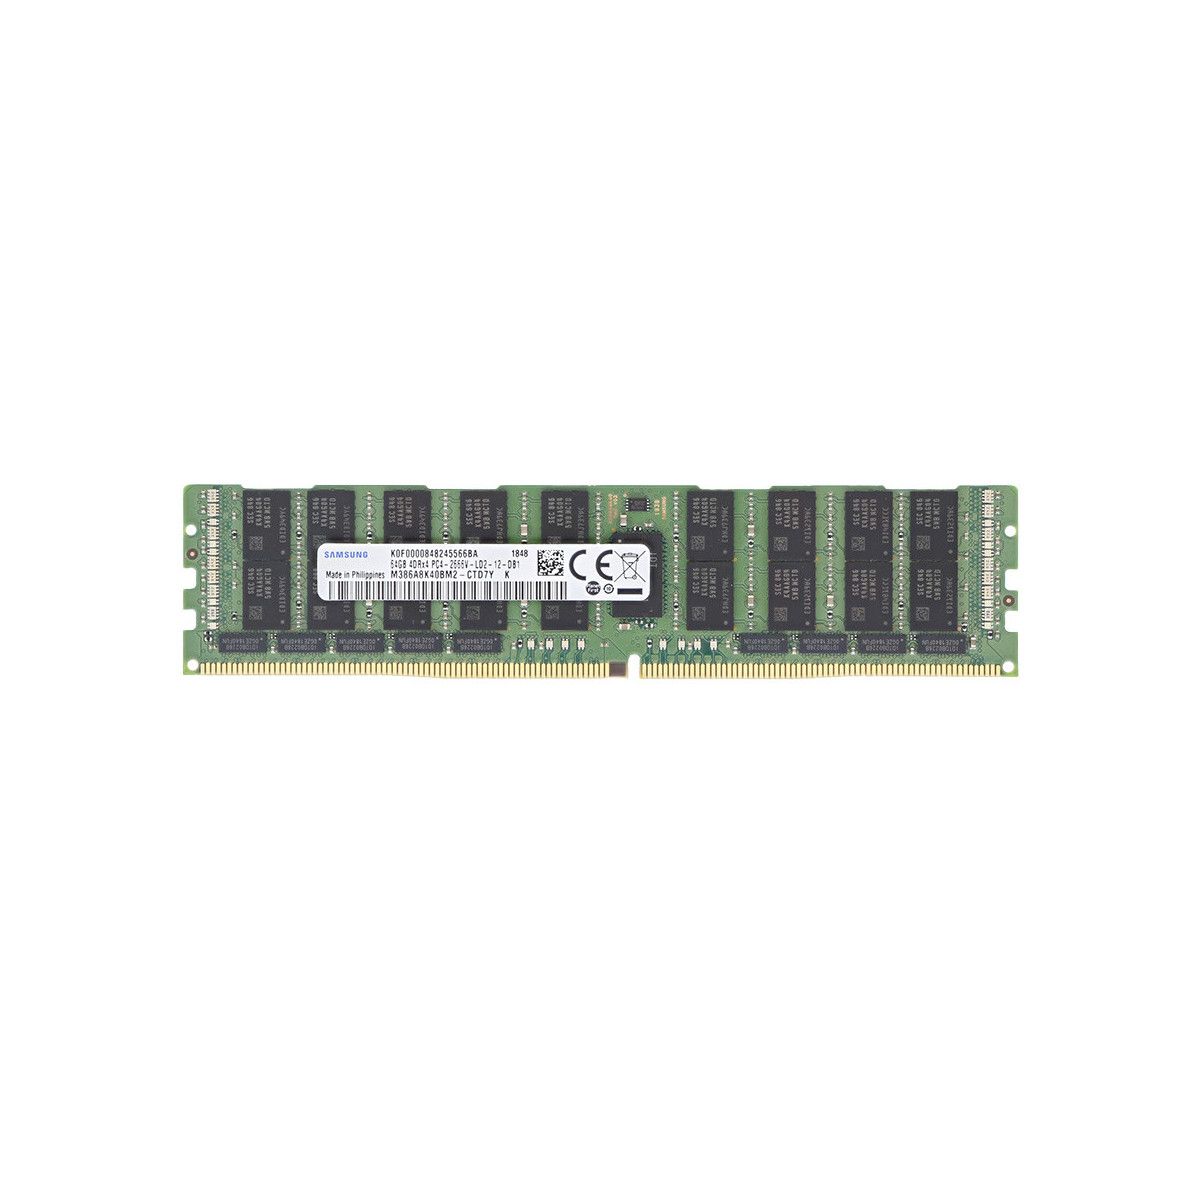 A8711890-MS - Memstar 1x 64GB DDR4-2400 LRDIMM PC4-19200T-L - Mem-Star compatibel OEM geheugen 1 - Memstar 